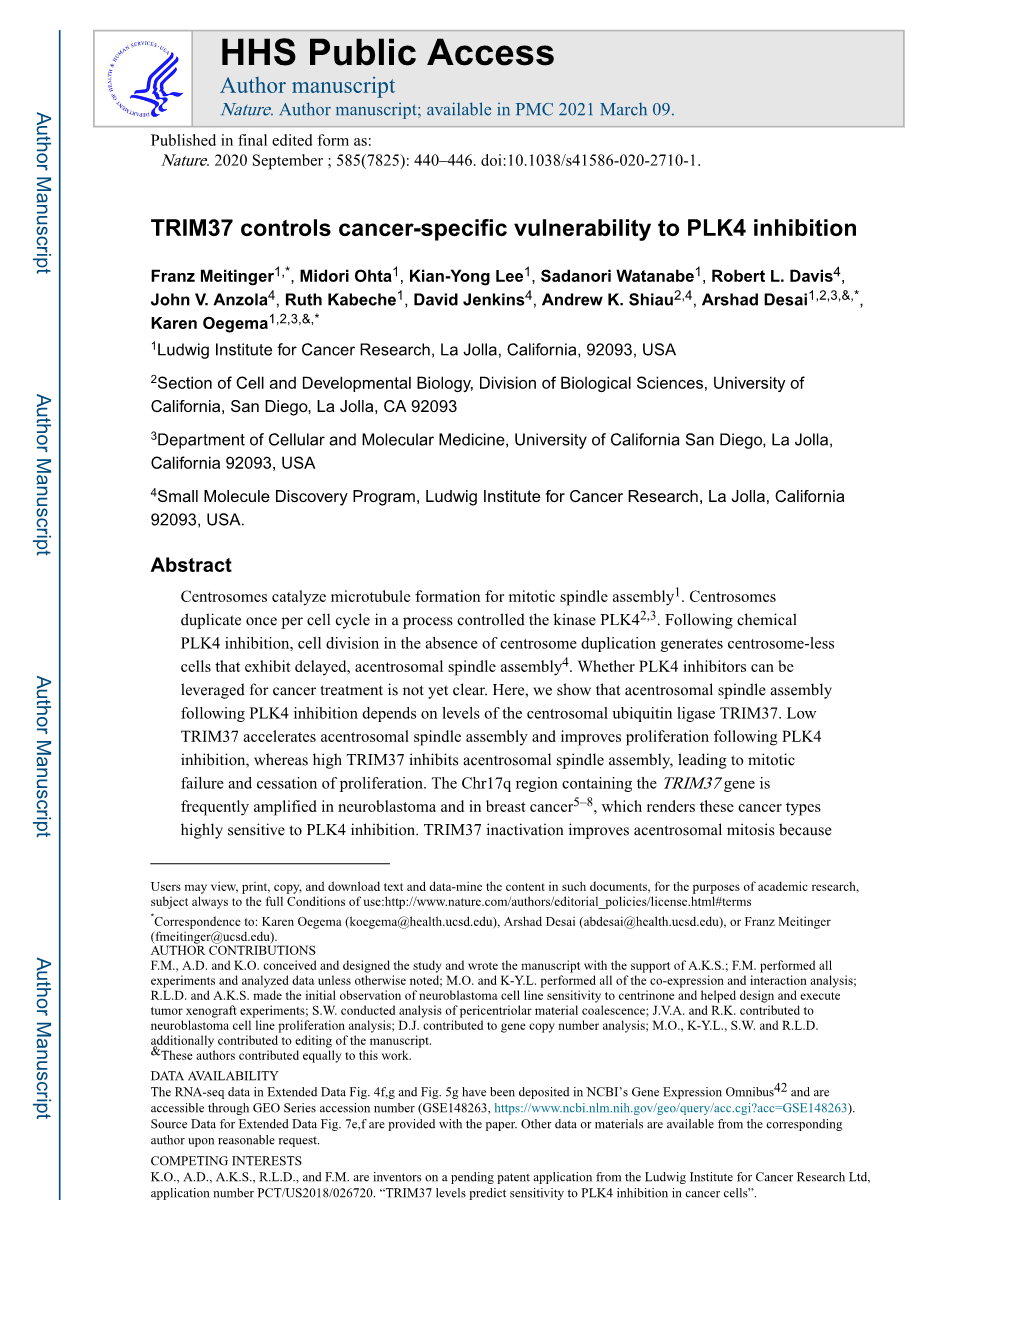 TRIM37 Controls Cancer-Specific Vulnerability to PLK4 Inhibition